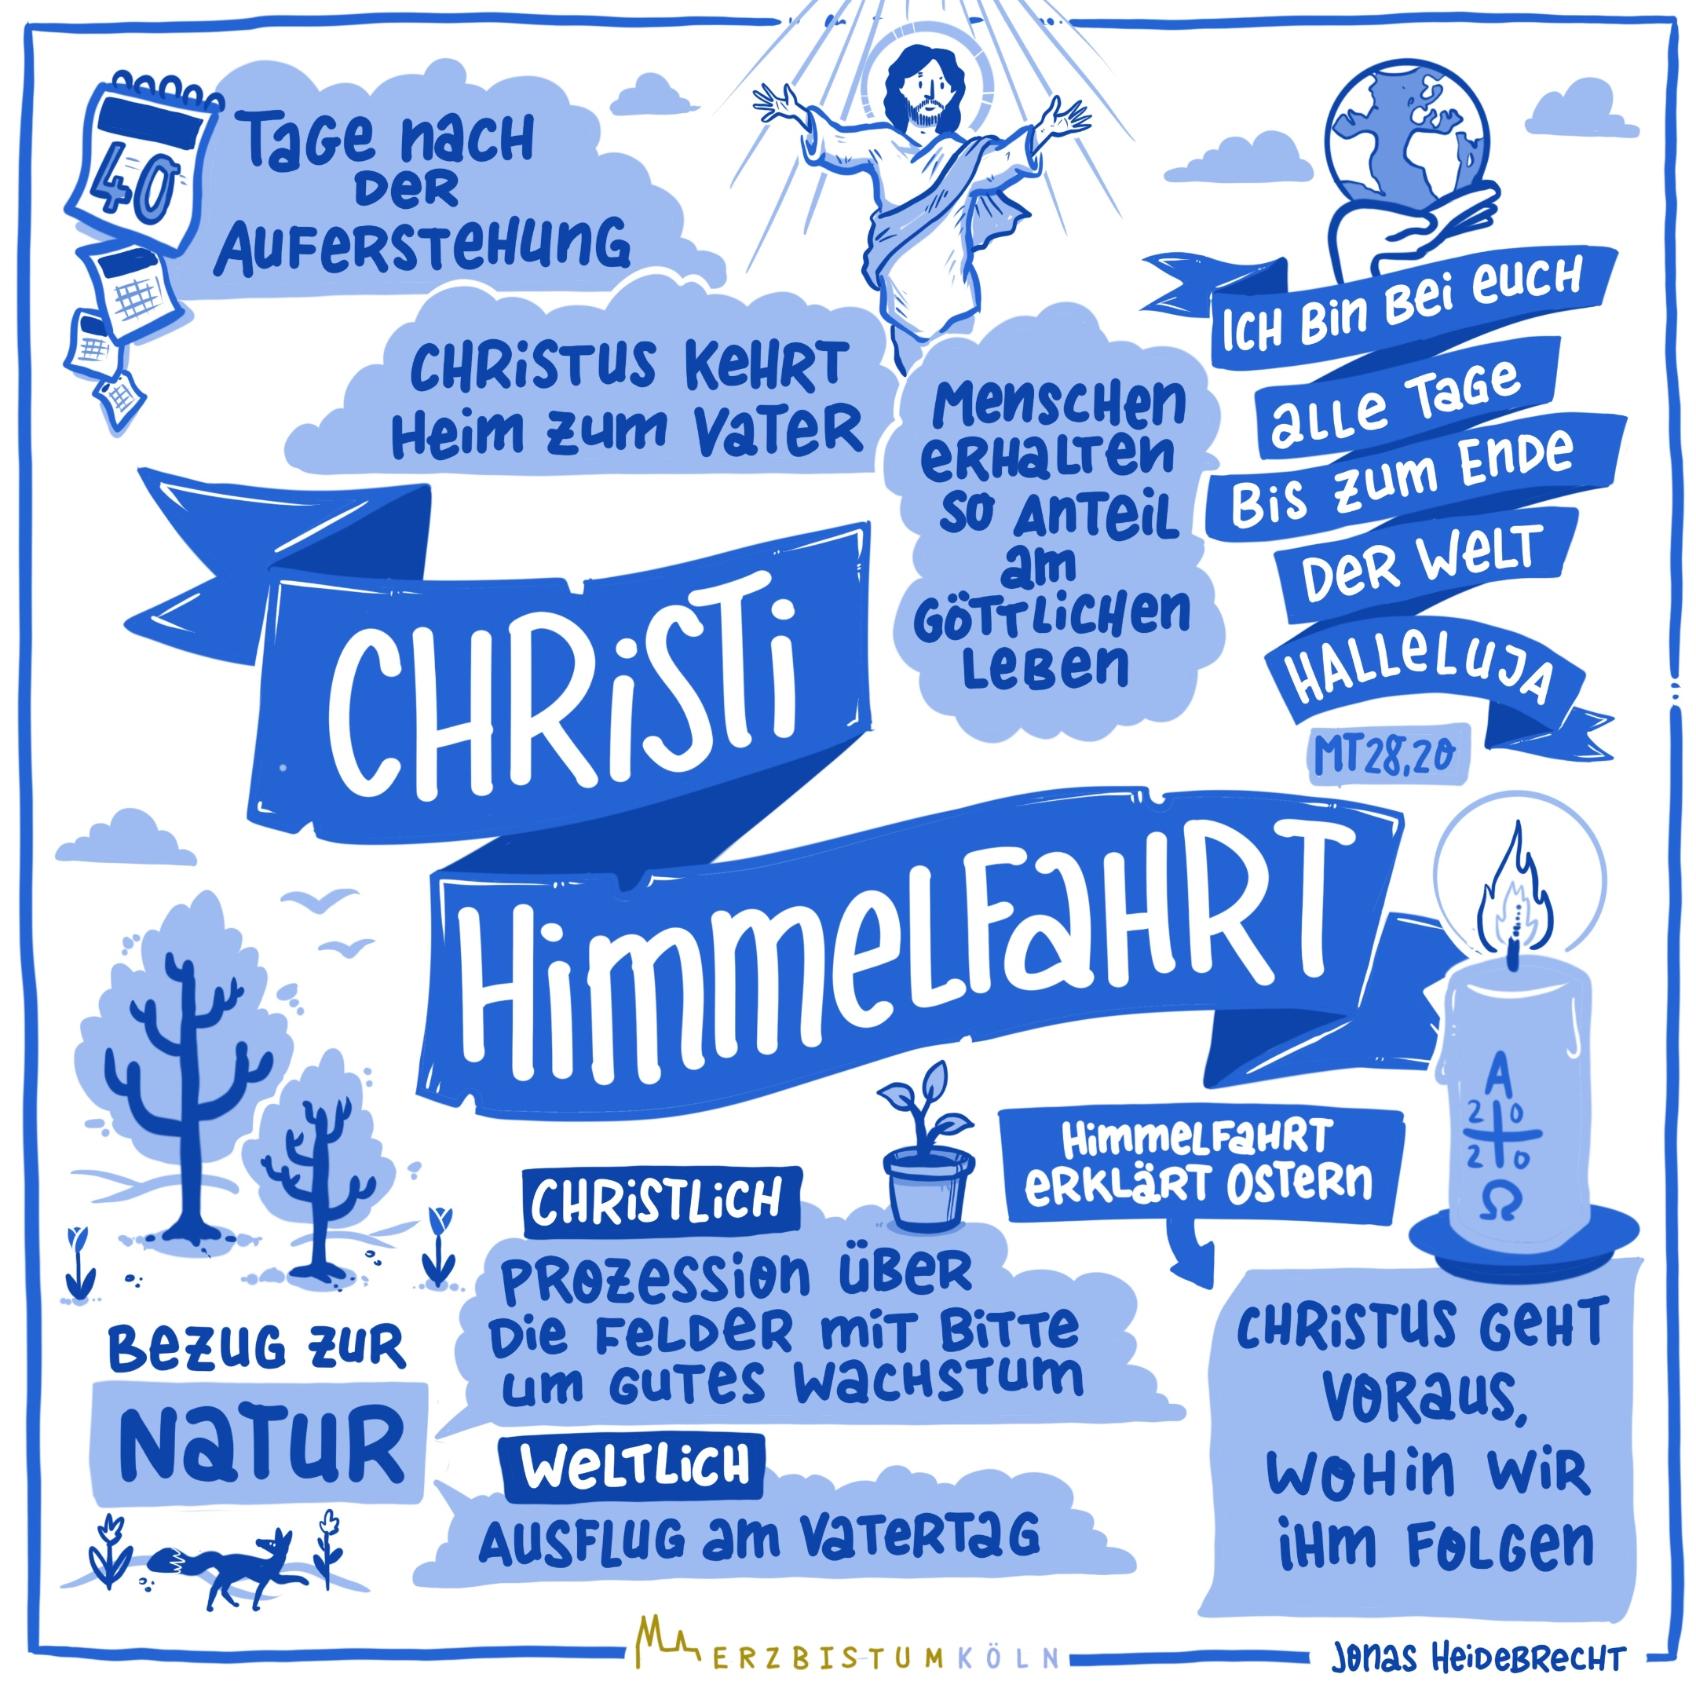 Christi Himmelfahrt_Erzbistum Köln - Heidebrecht (c) Erzbistum Köln_Jonas Heidebrecht